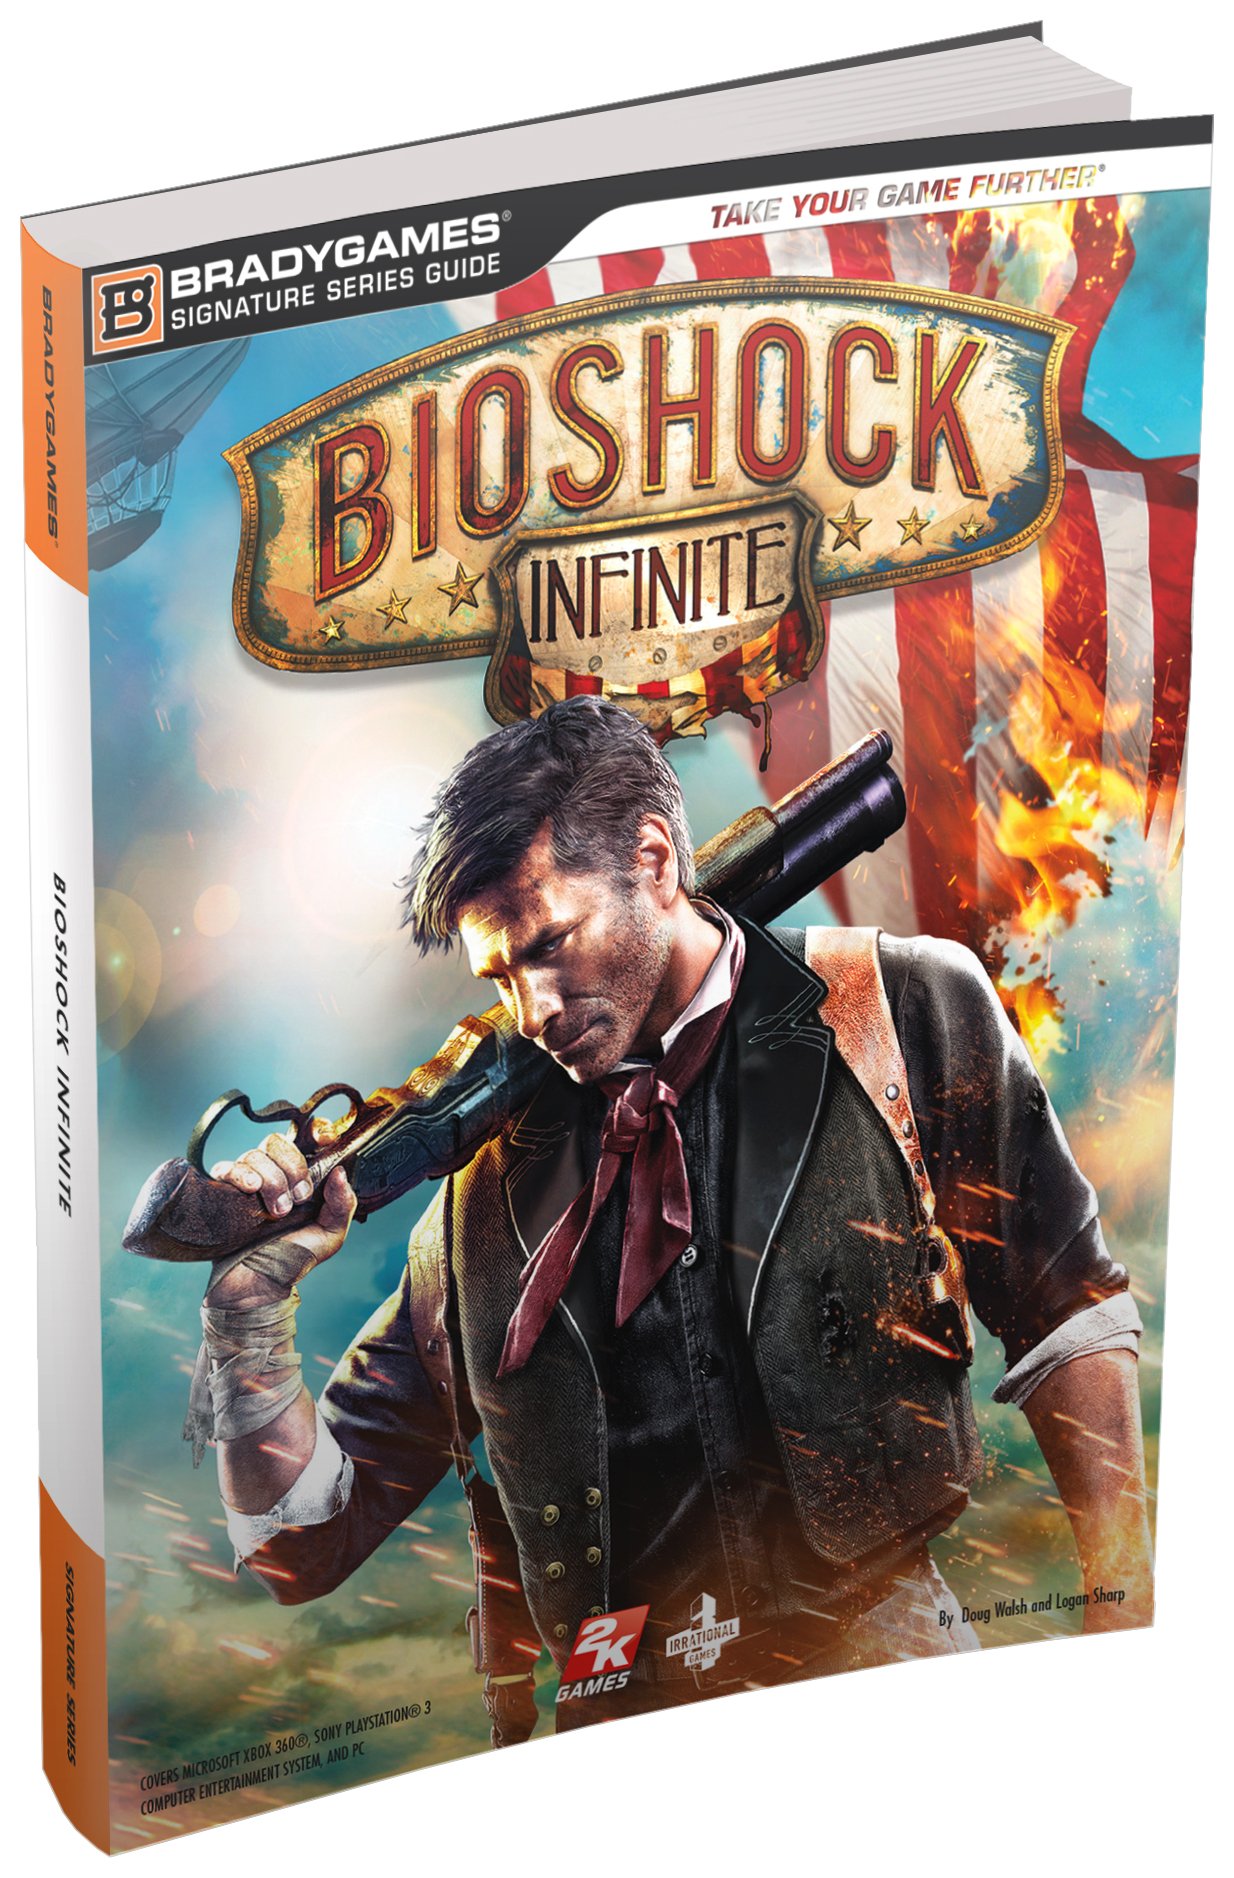 2013 video game ad page ~ BIOSHOCK INIFINITE